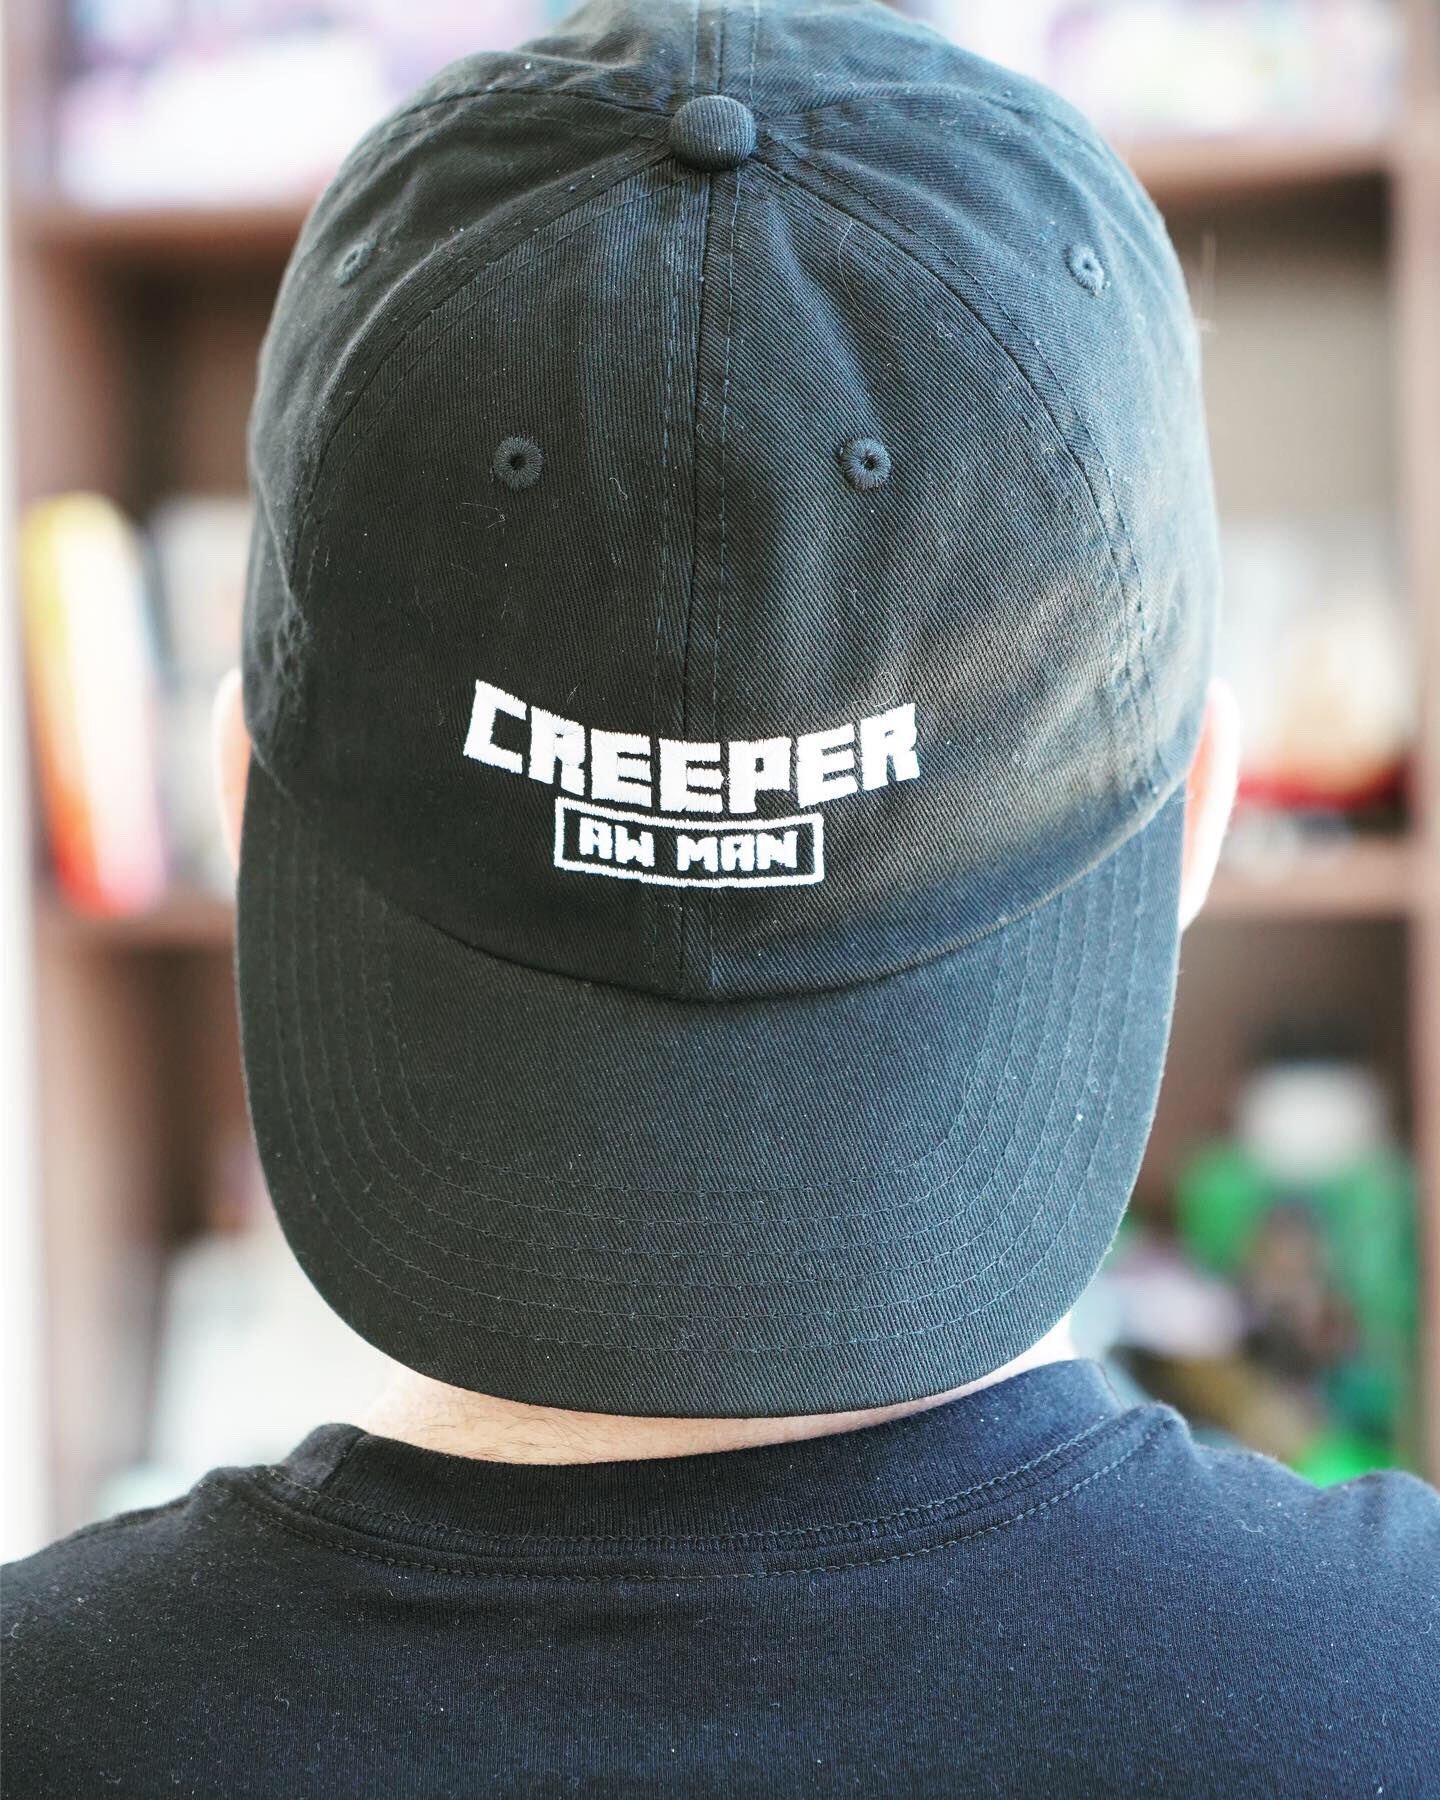 Creeper Aw Man Casual Breathable and Comfortable Adult Cowboy Hat Baseball Cap